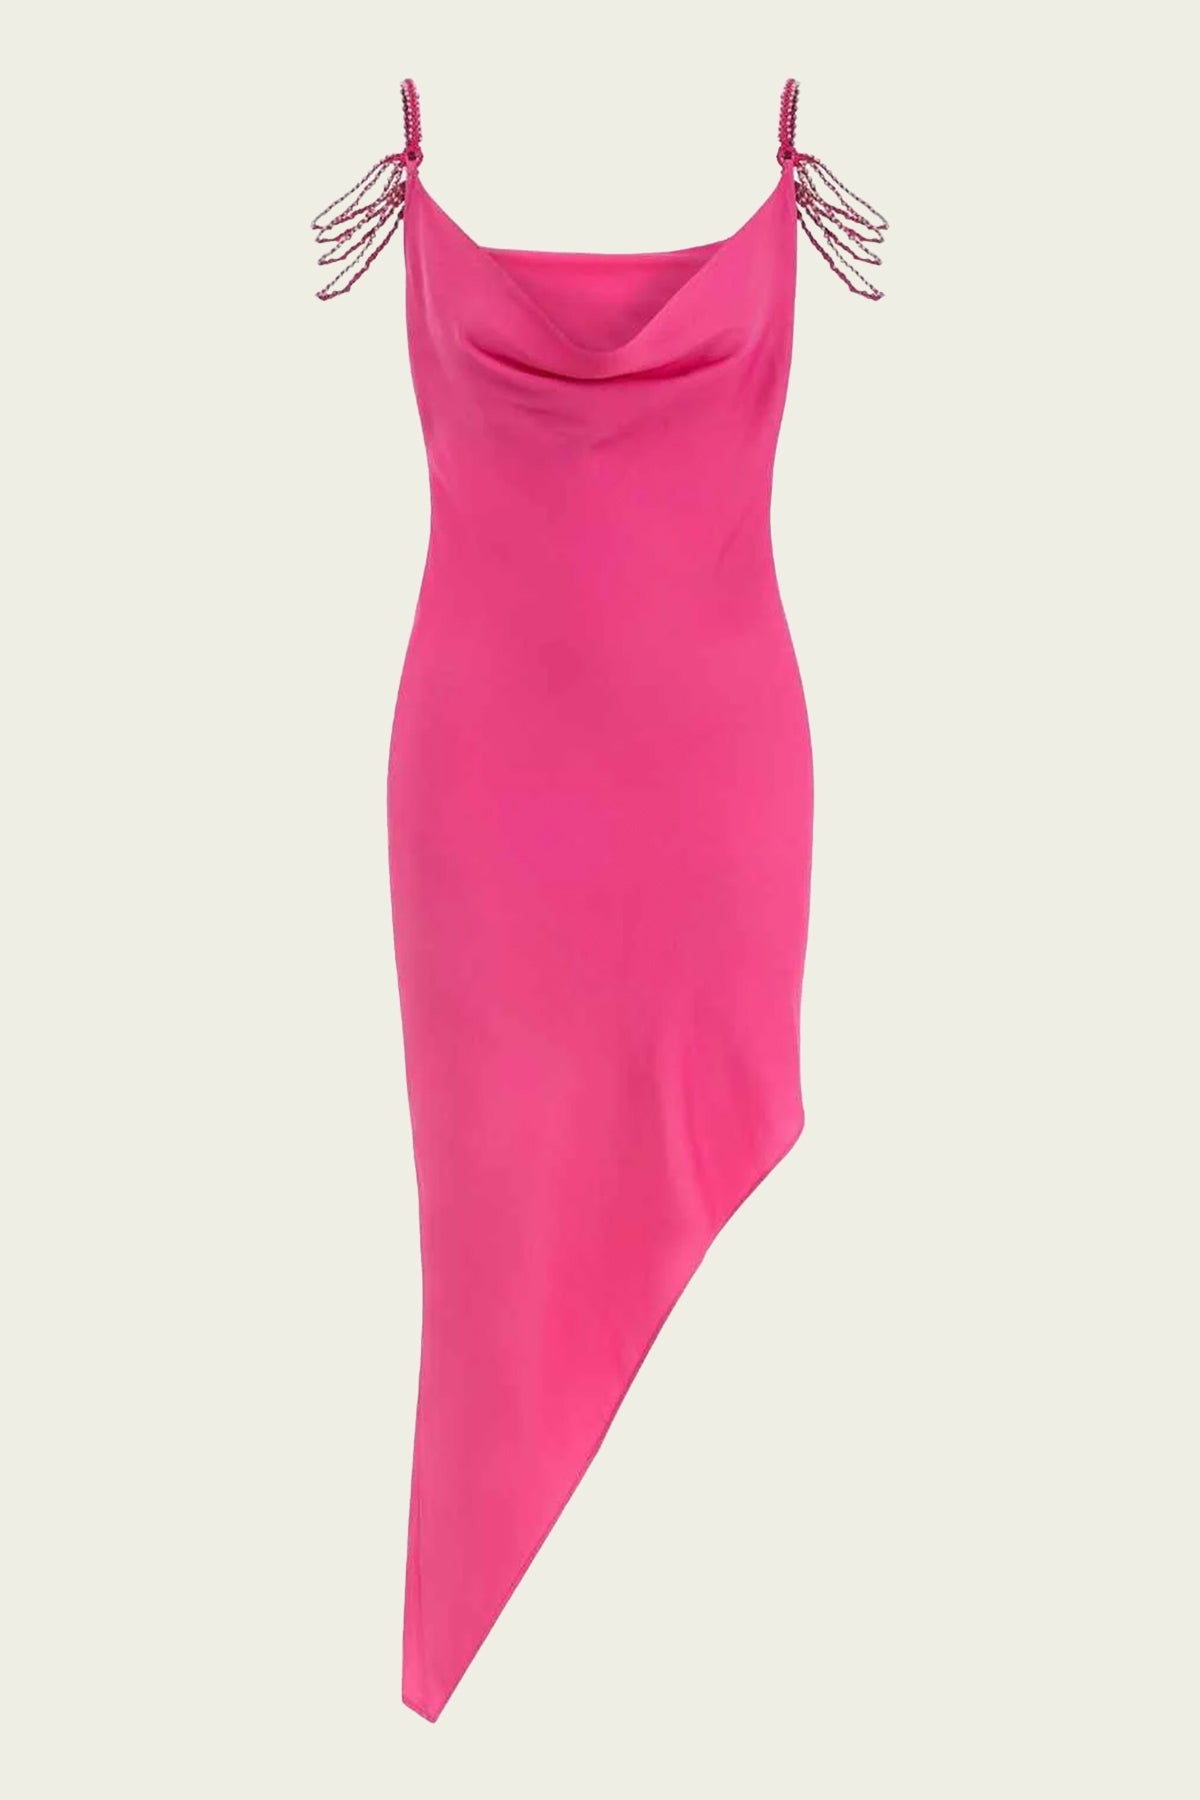 Ruby Beaded Dress in Fuschia - shop-olivia.com